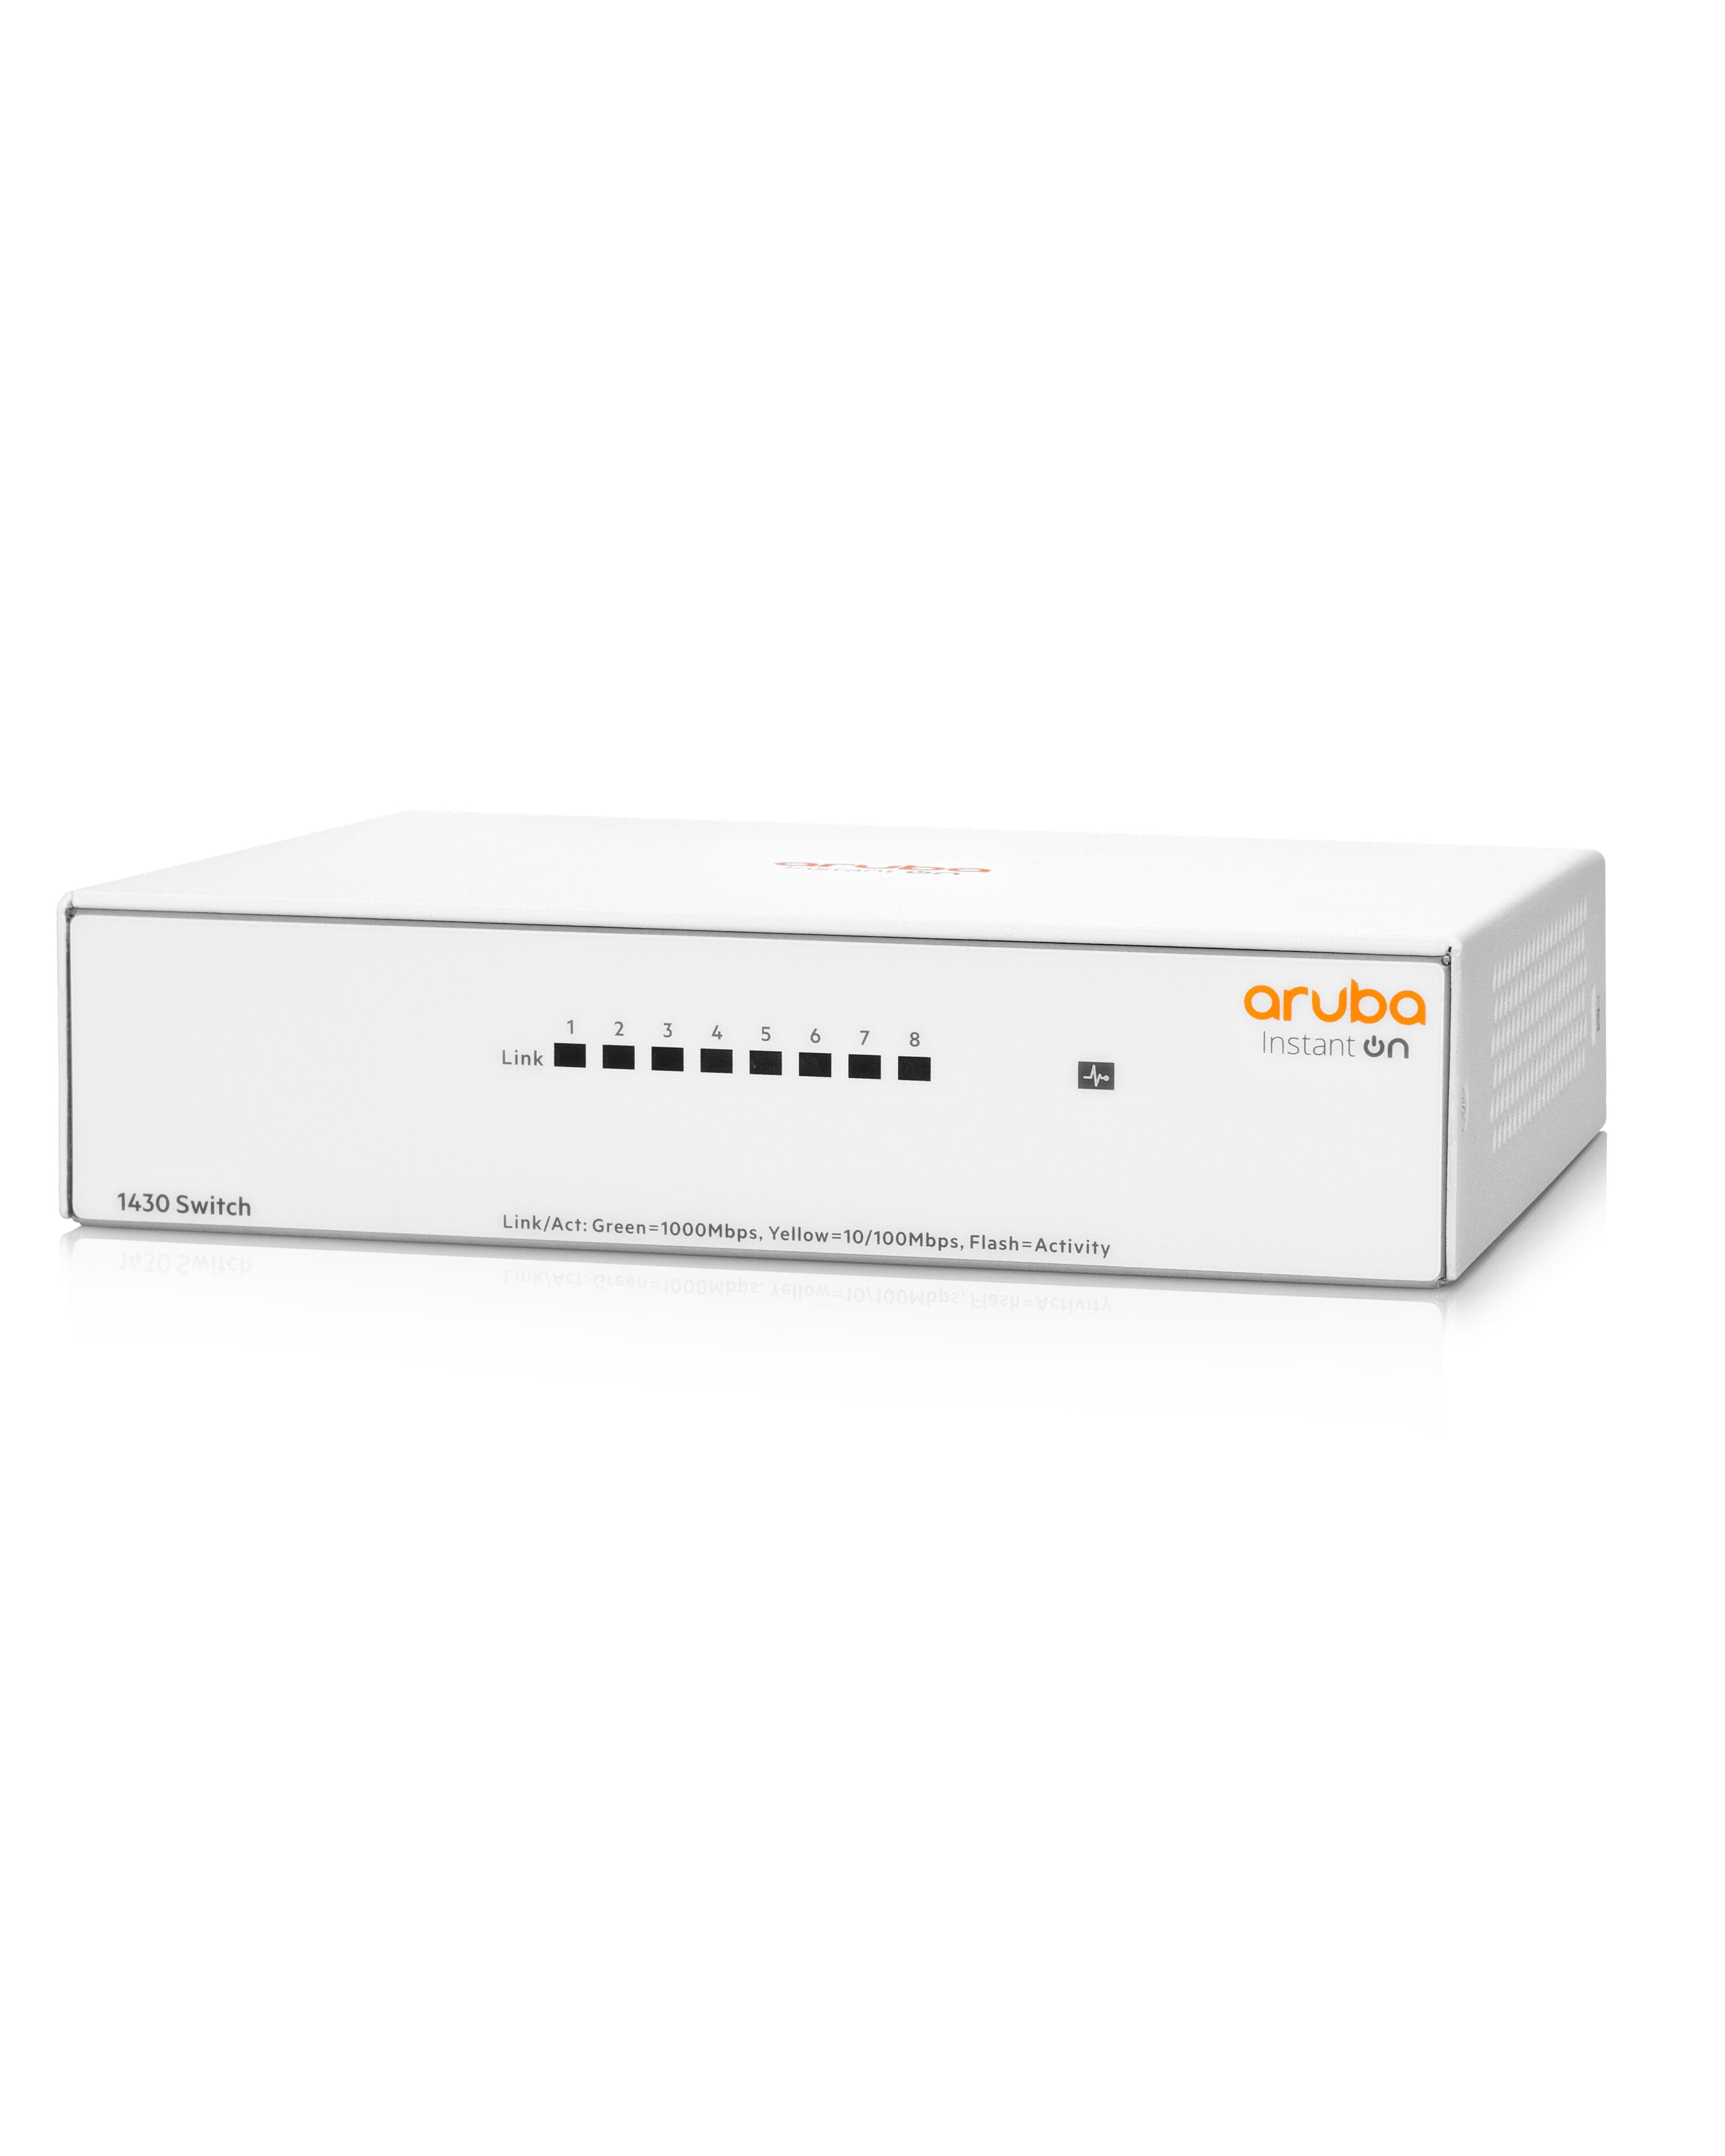 Aruba Instant On SMB Switch 1430 R8R45A Side